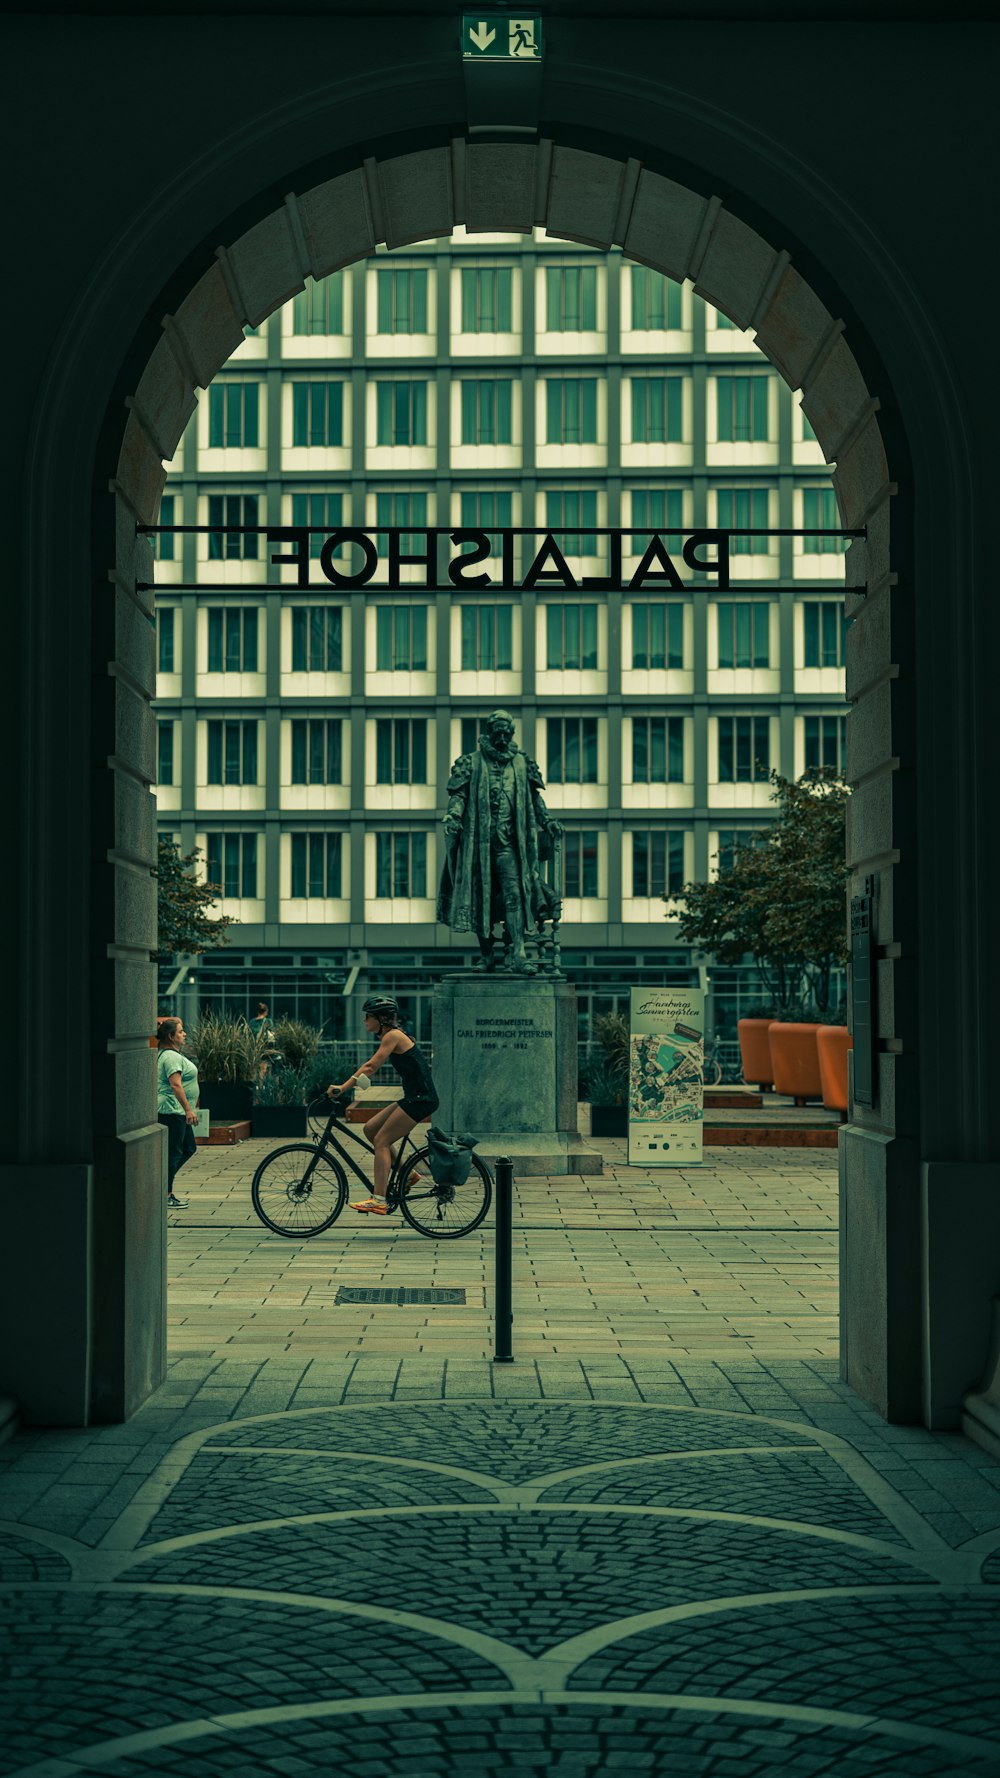 man in black jacket riding bicycle near building during daytime